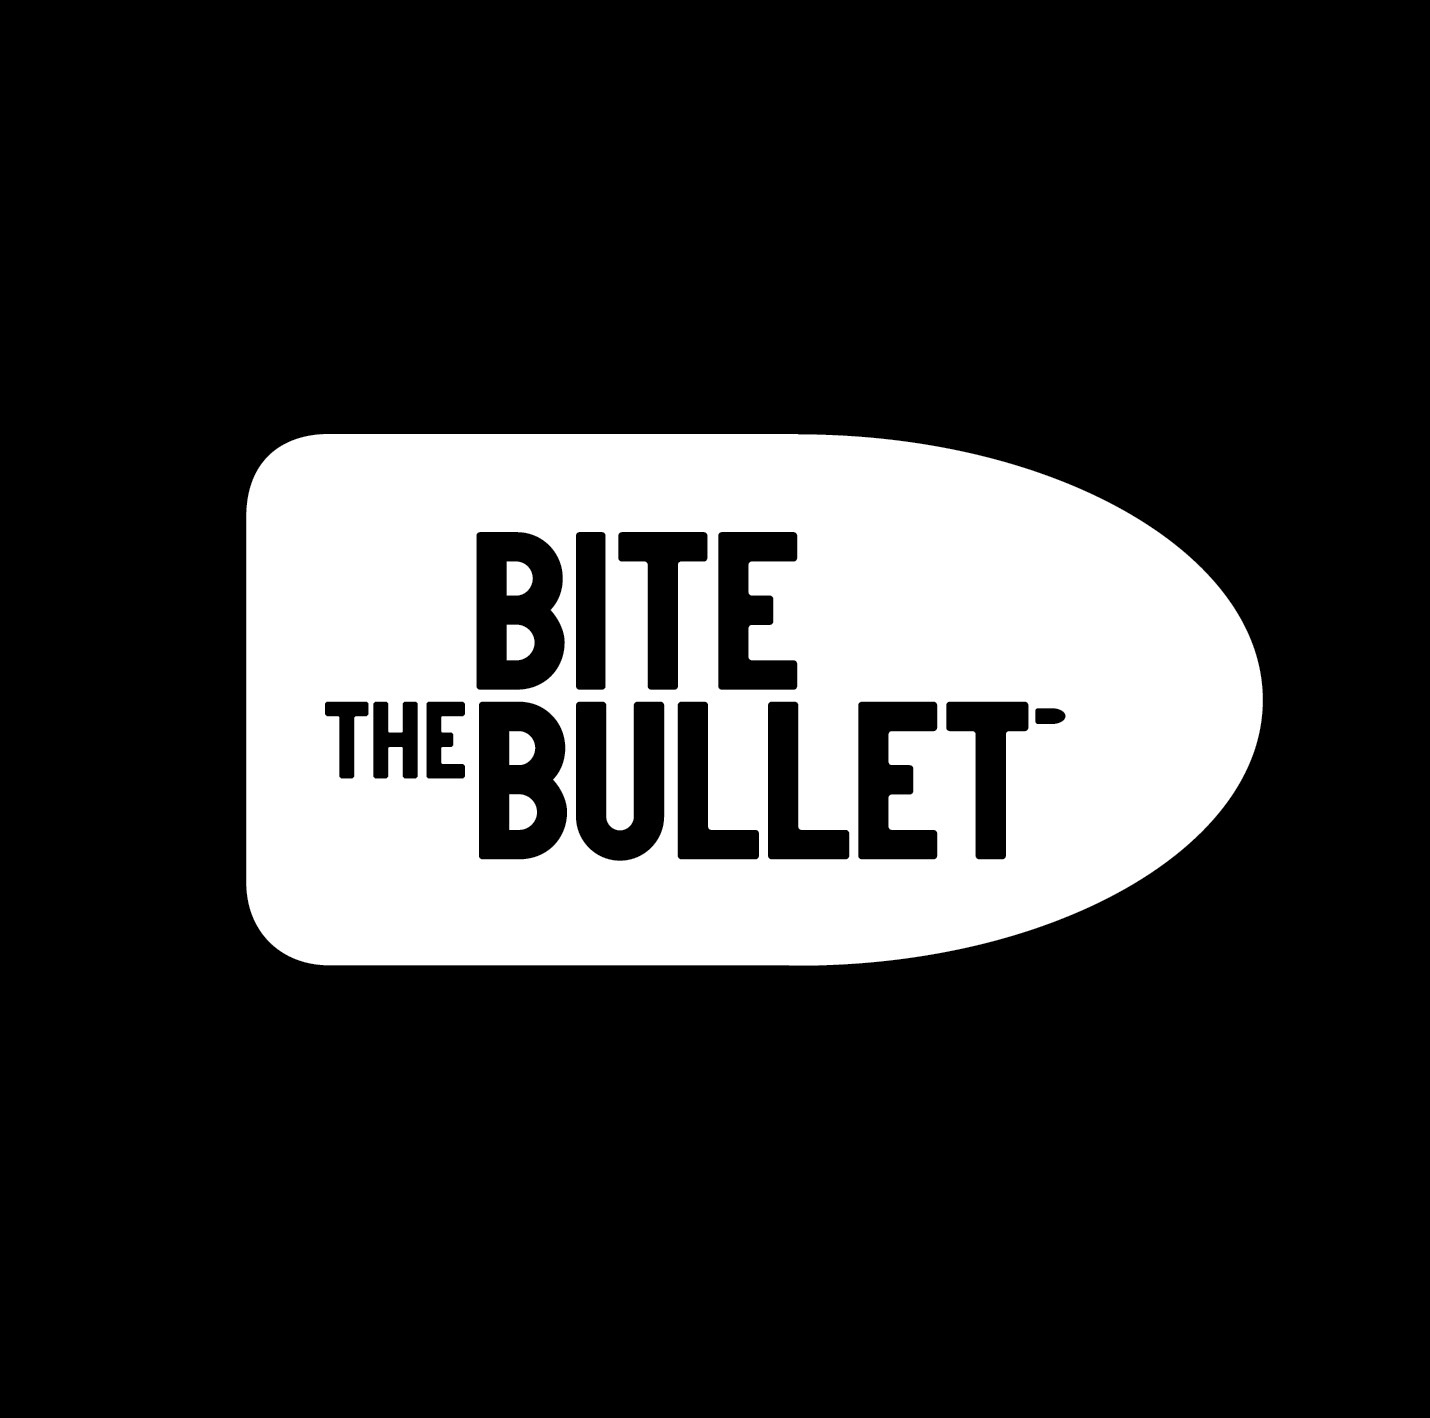 Перевести bites. Bite the Bullet. Bite the Bullet перевод. Bite the Bullet meaning. Bite the Bullet end of the line.